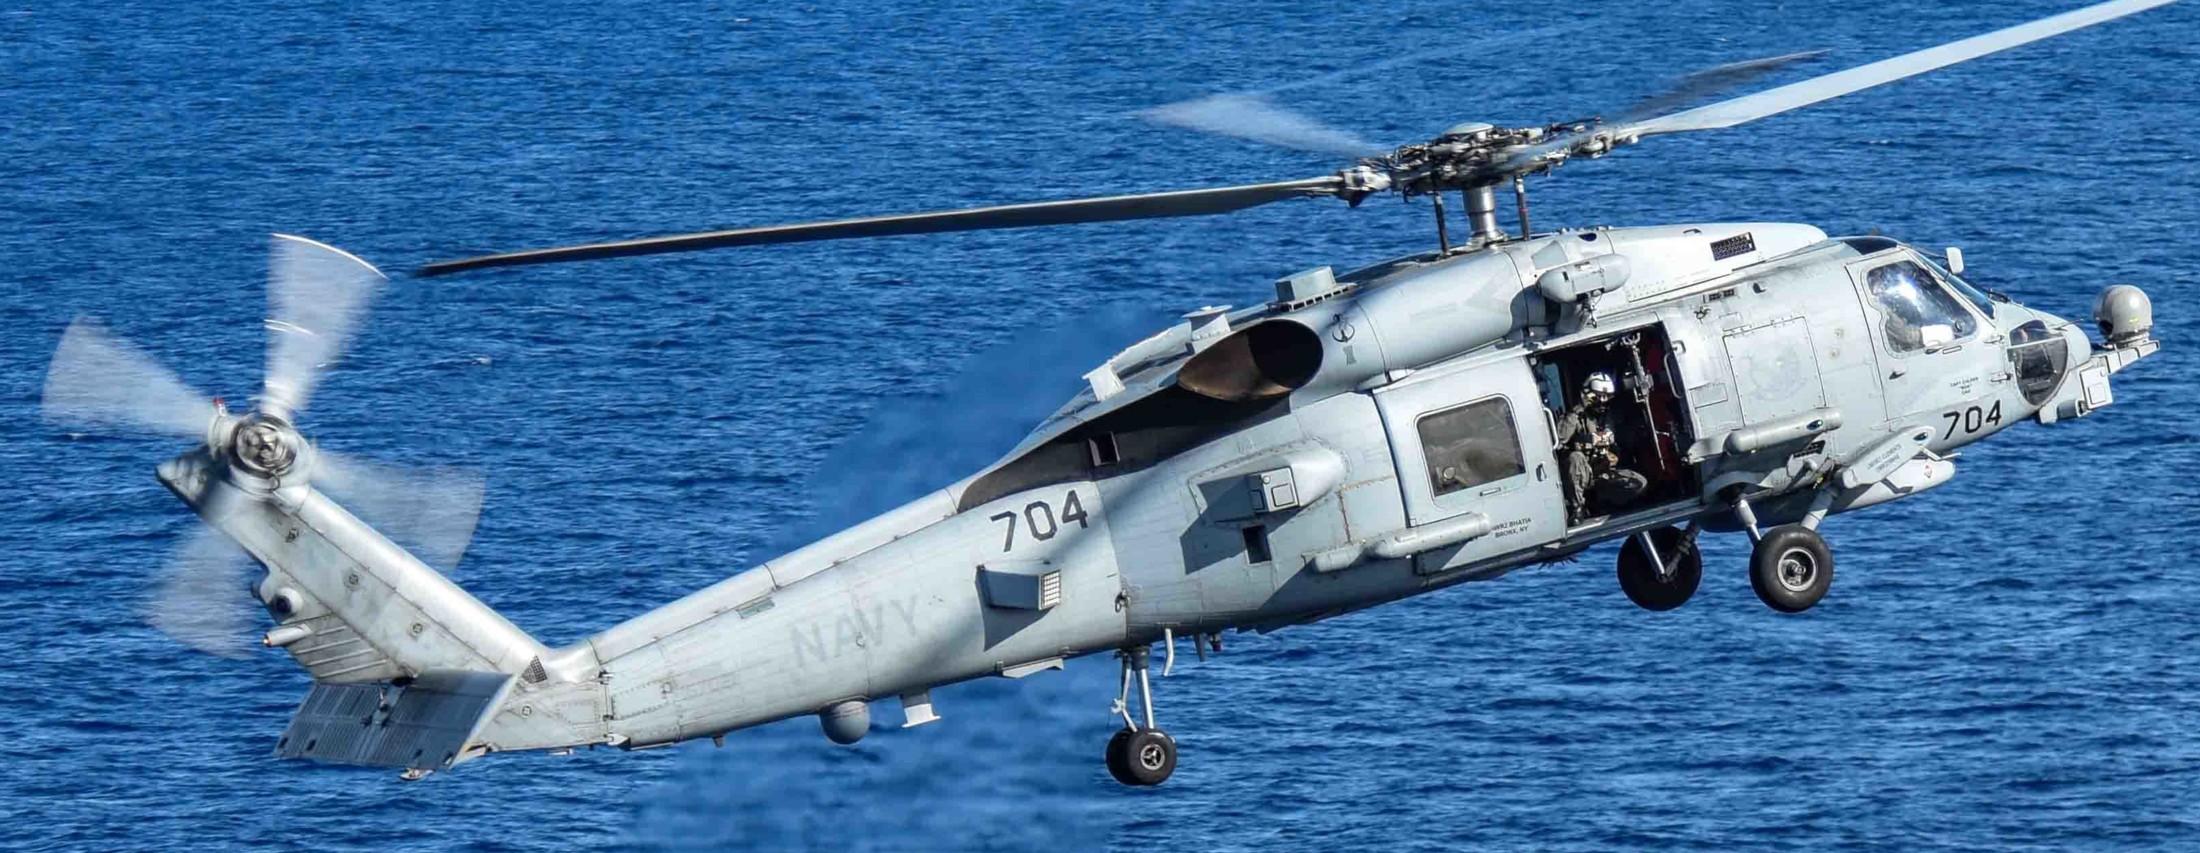 hsm-77 saberhawks helicopter maritime strike squadron mh-60r seahawk cvw-5 cvn-76 uss ronald reagan 73